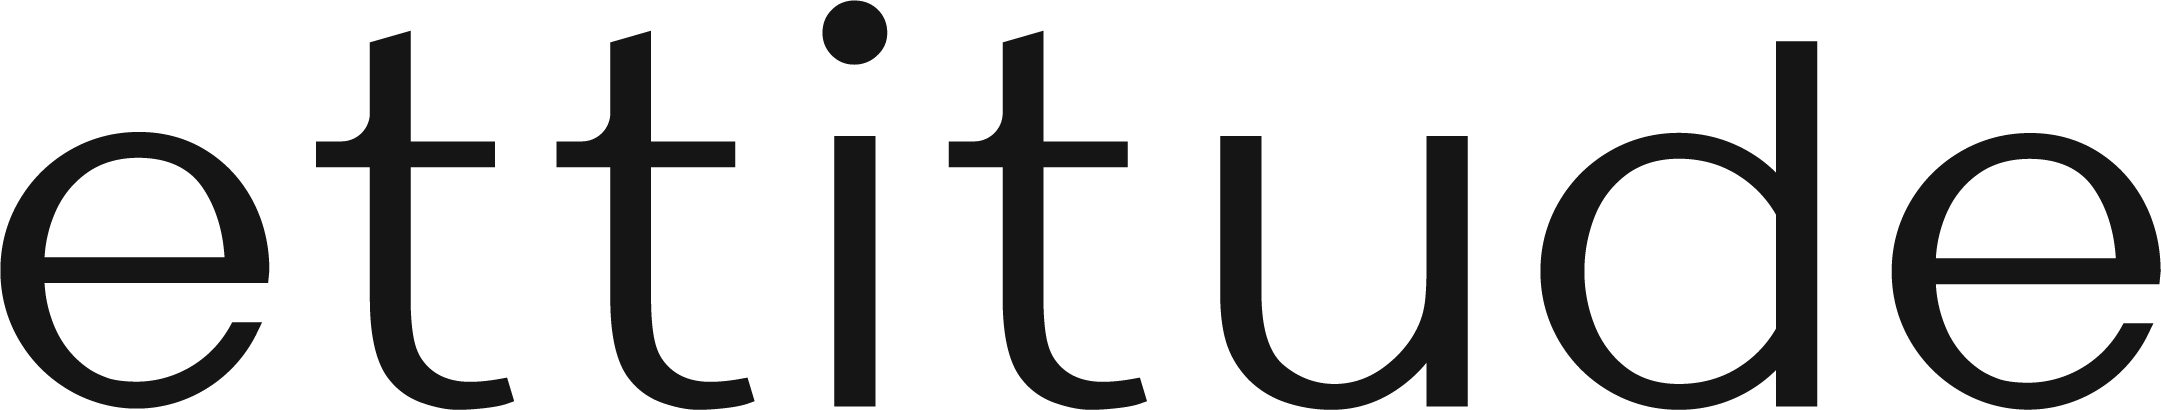 ettitude Support logo